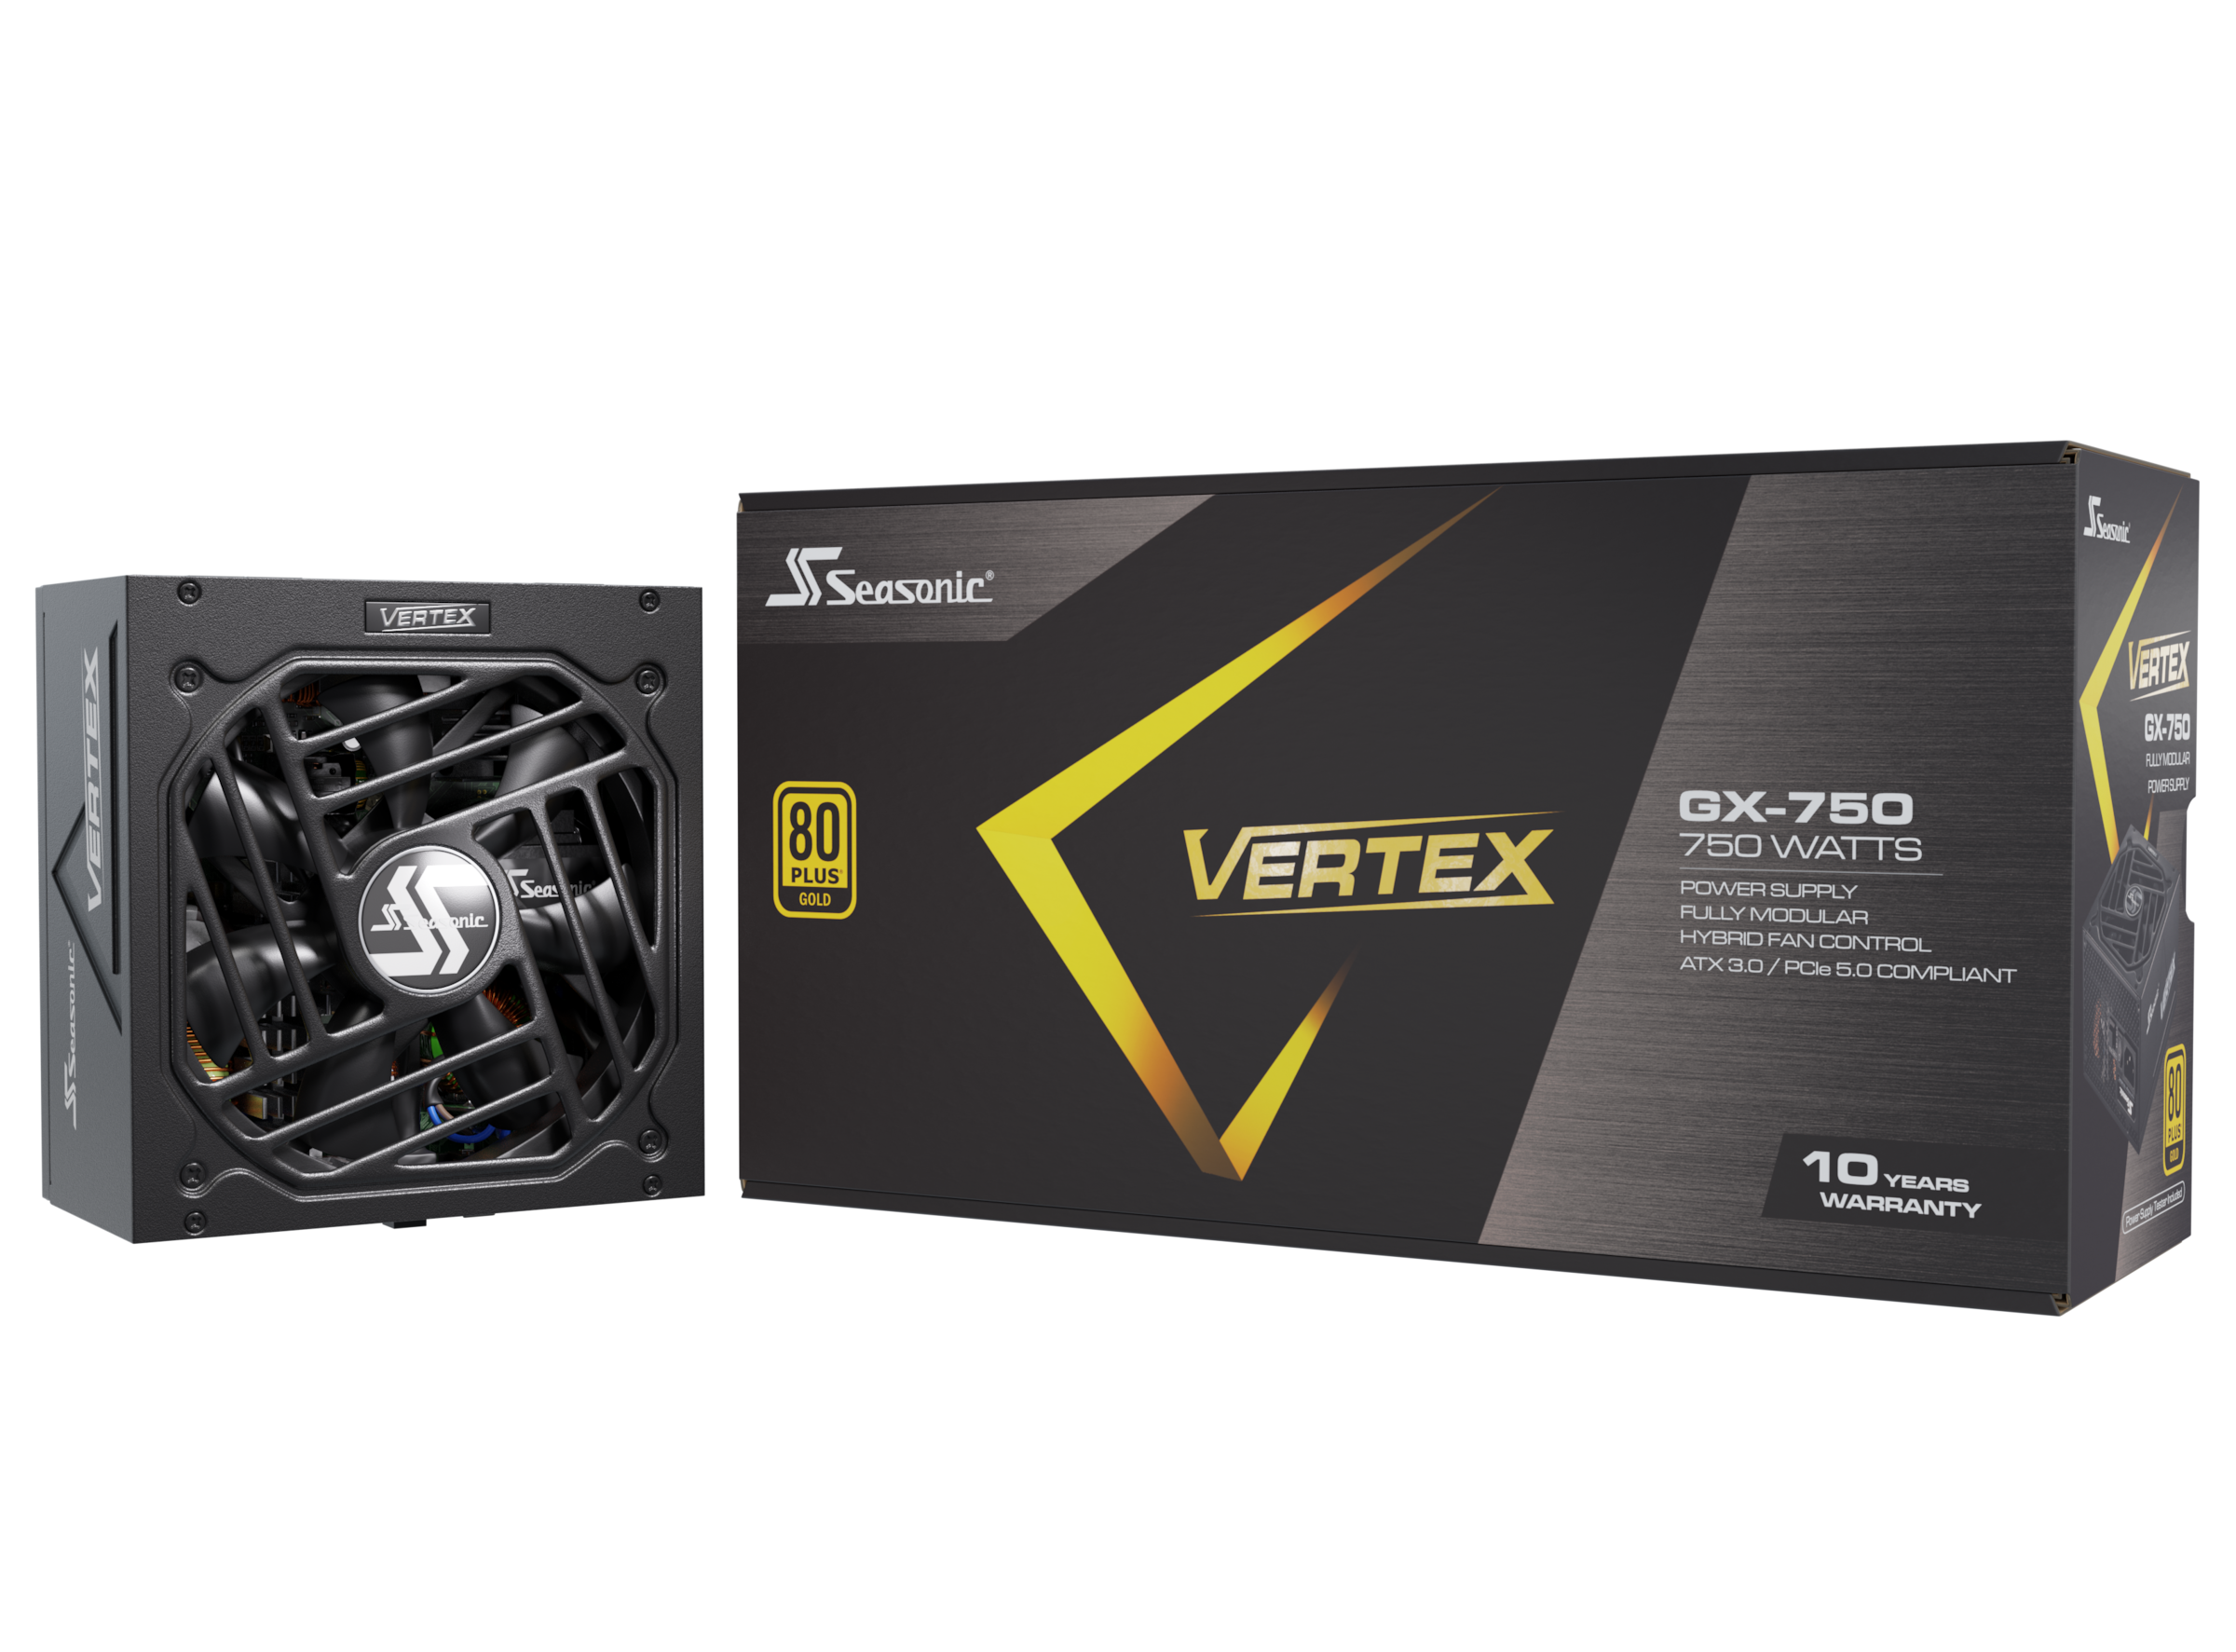 Seasonic PC-Netzteil »VERTEX-GX-750«, (1 St.)